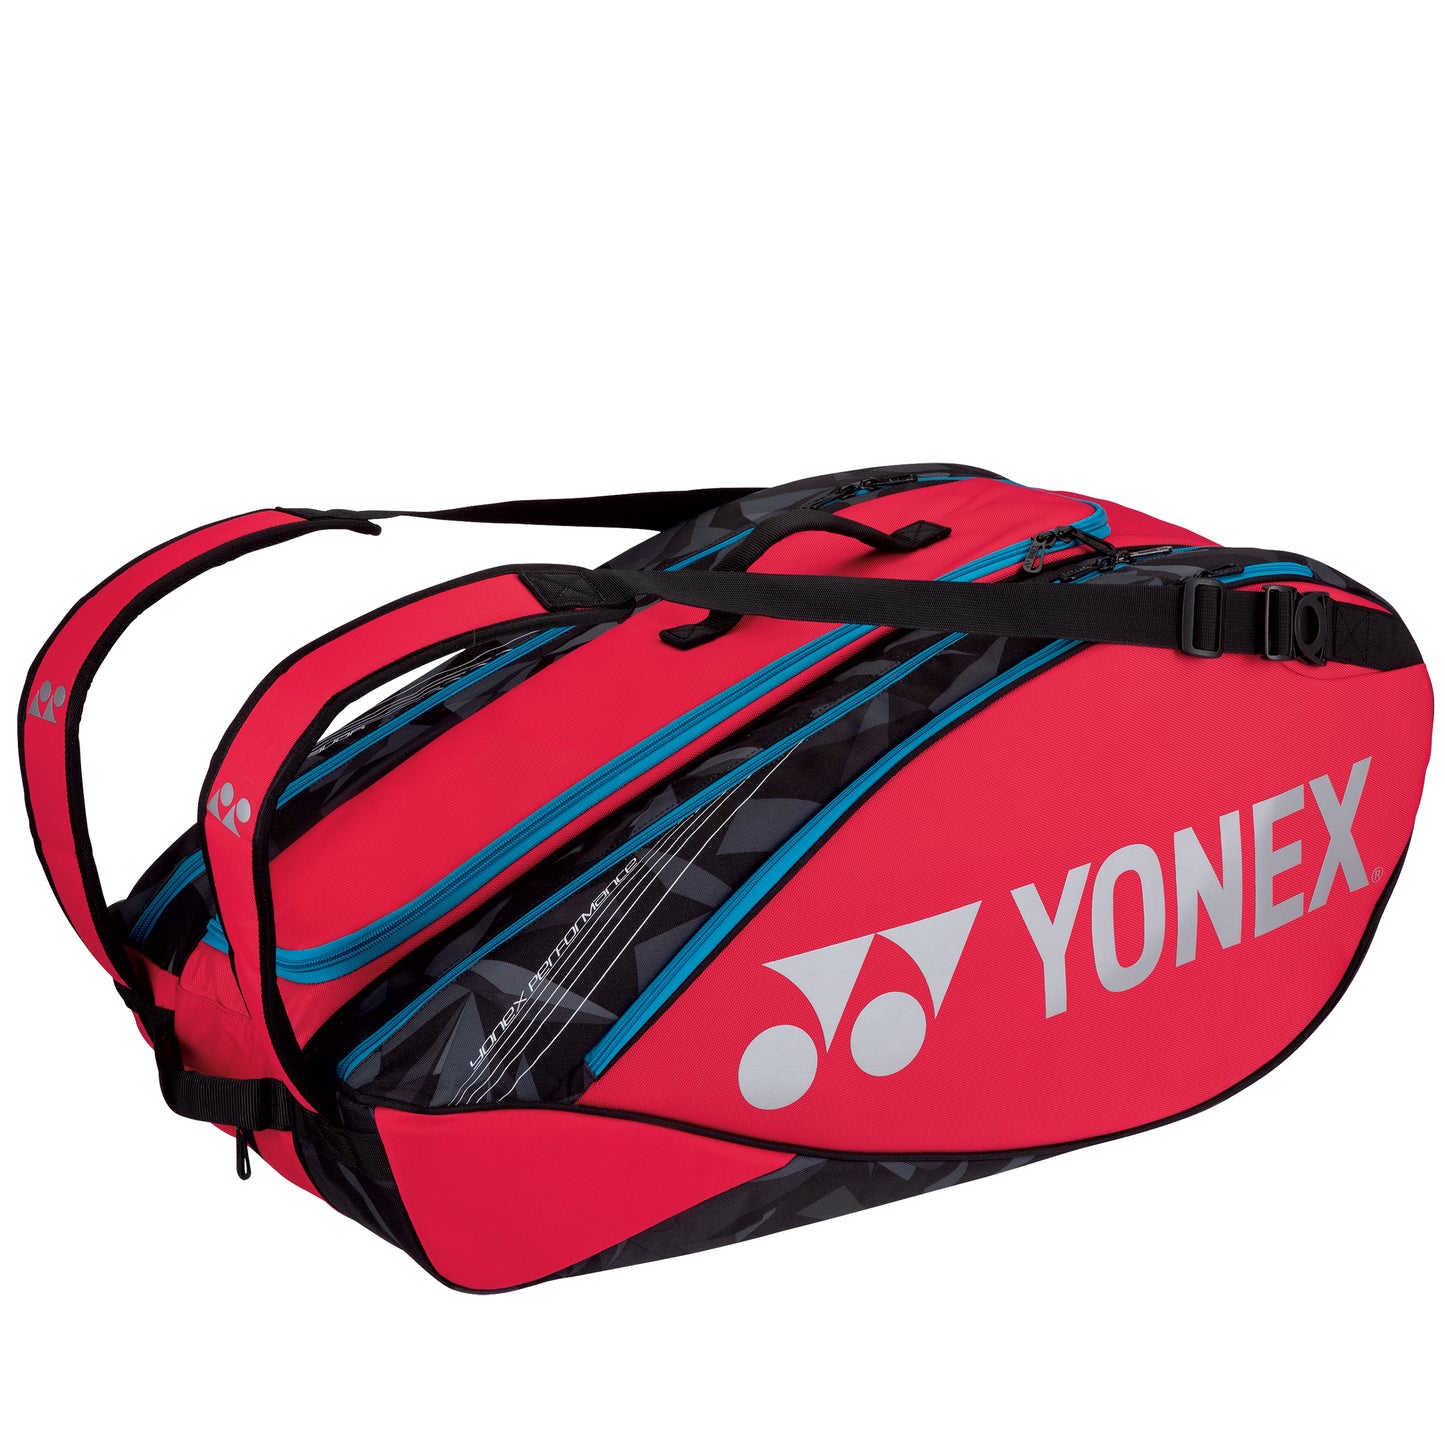 Yonex Pro Series Scarlet 9 pack tennis badminton bag